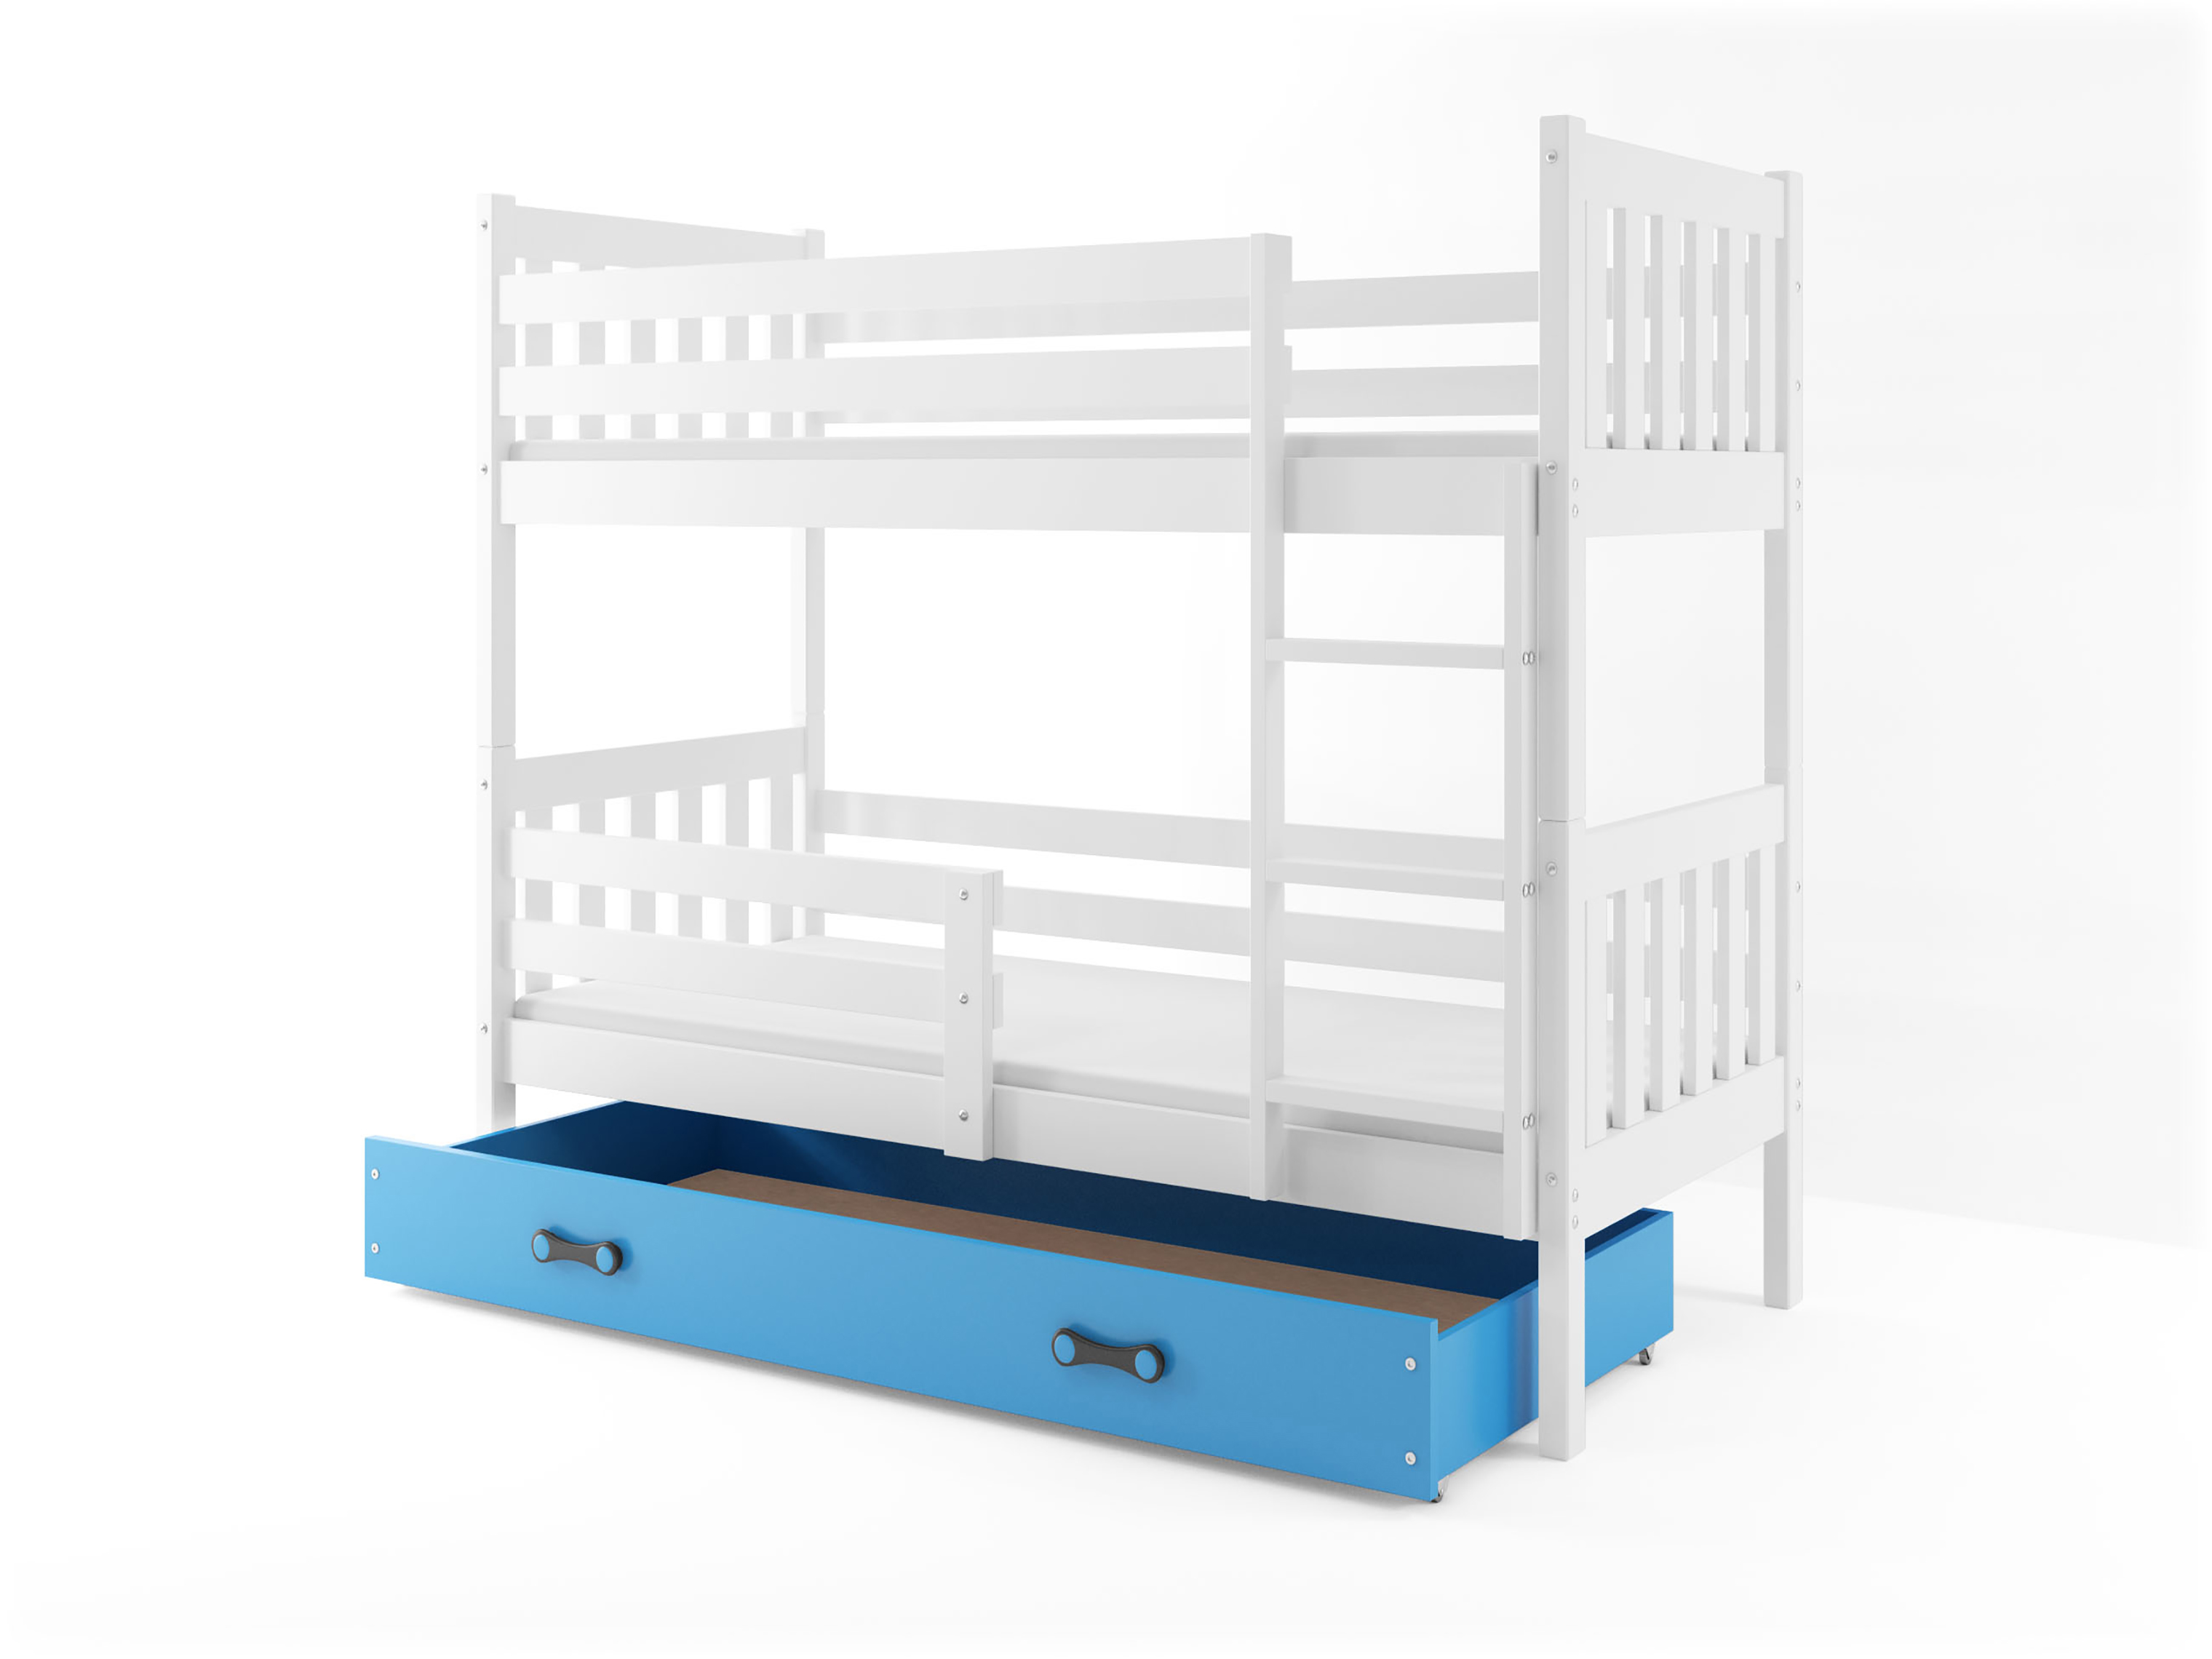 Patrová postel 80 x 190 cm Carius B (bílá + modrá) (s rošty, matracemi a úl. prostorem)